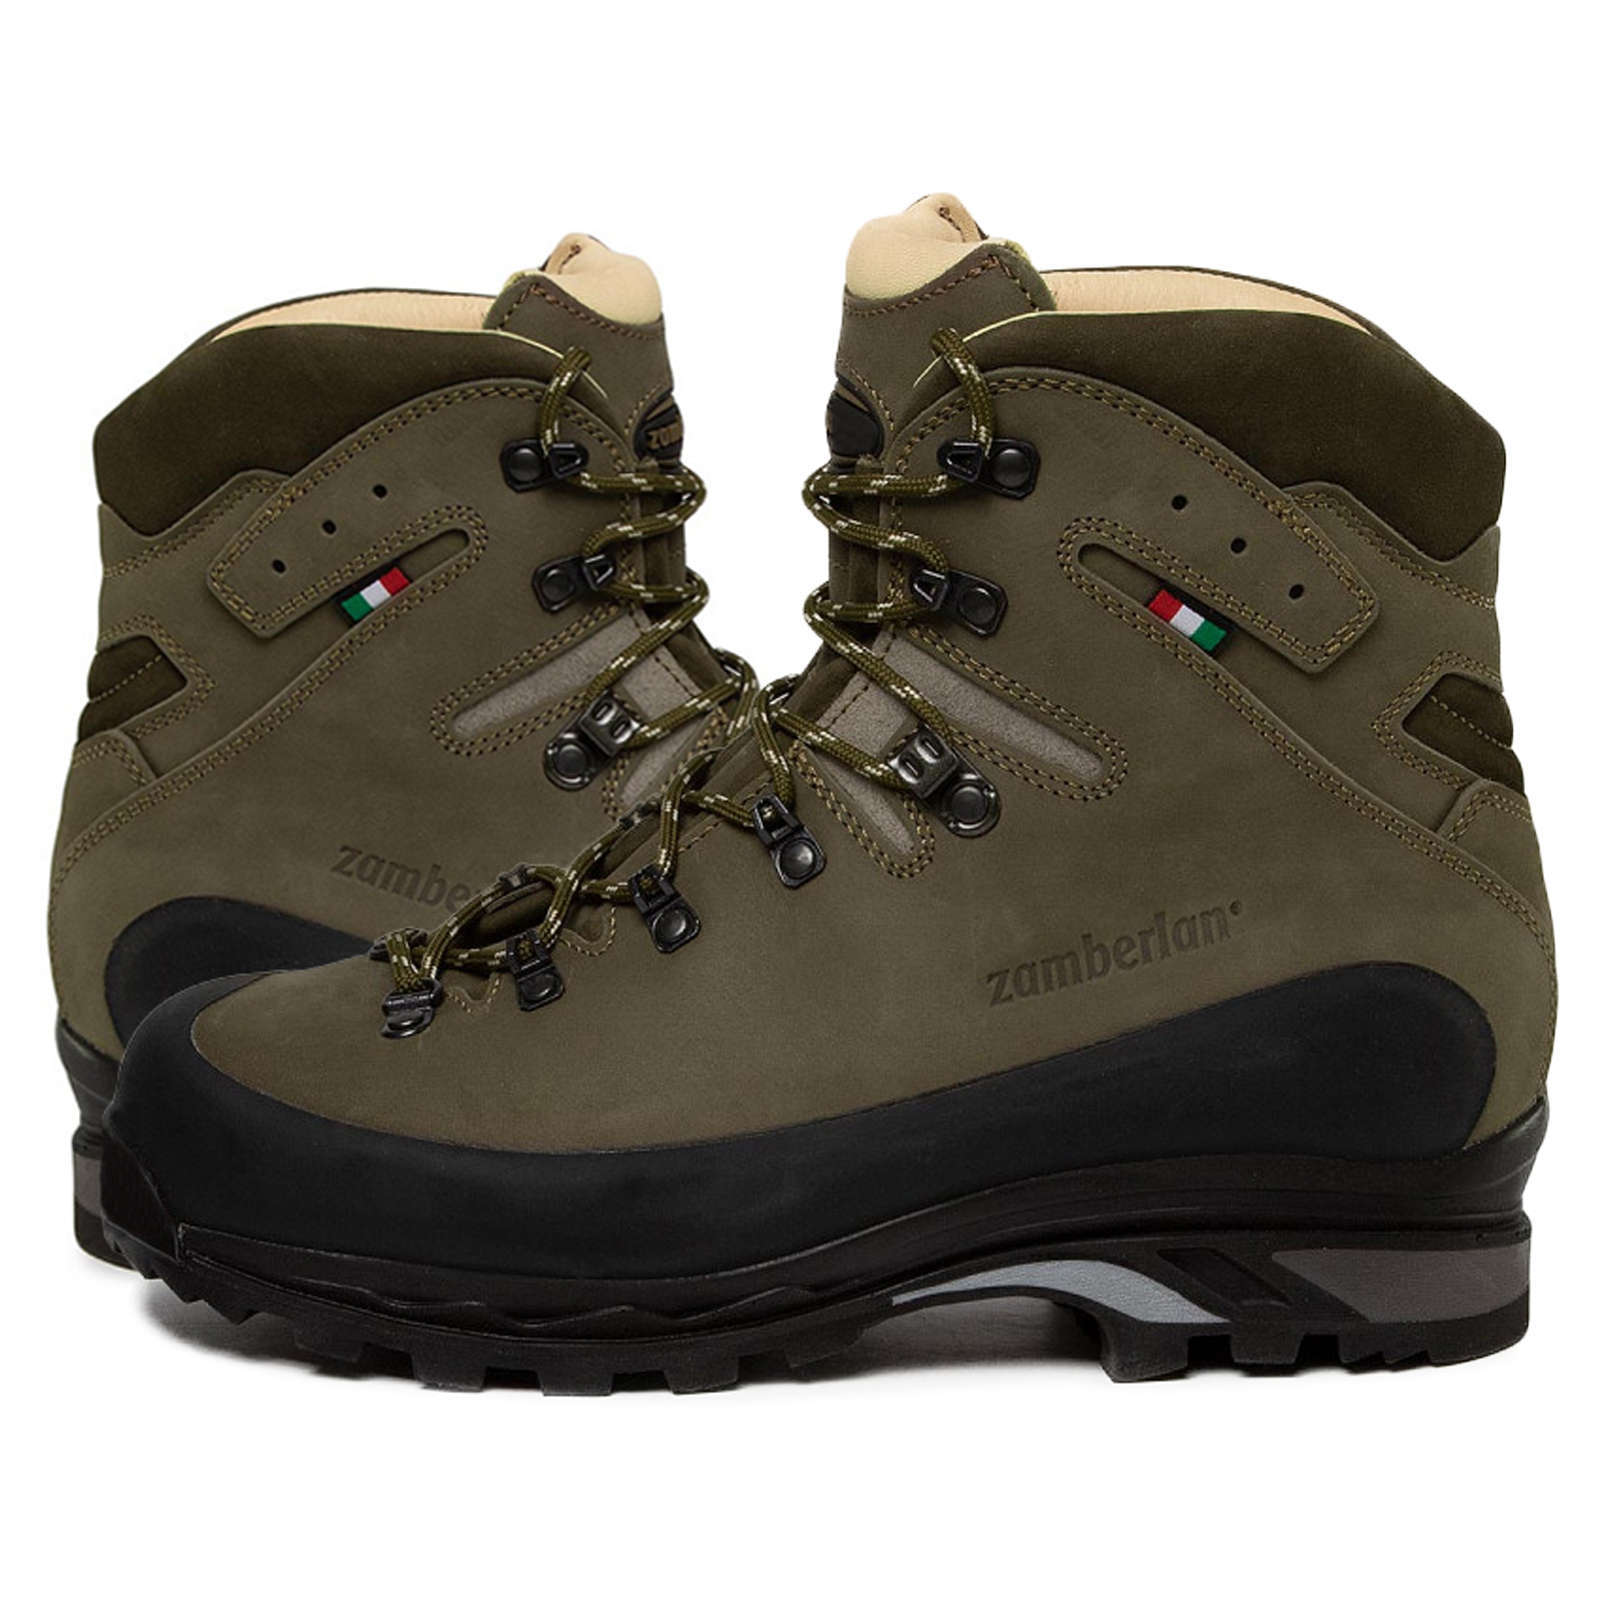 Zamberlan 961 Guide LTH RR Nubuck Leather Men's Trekking Boots#color_brown